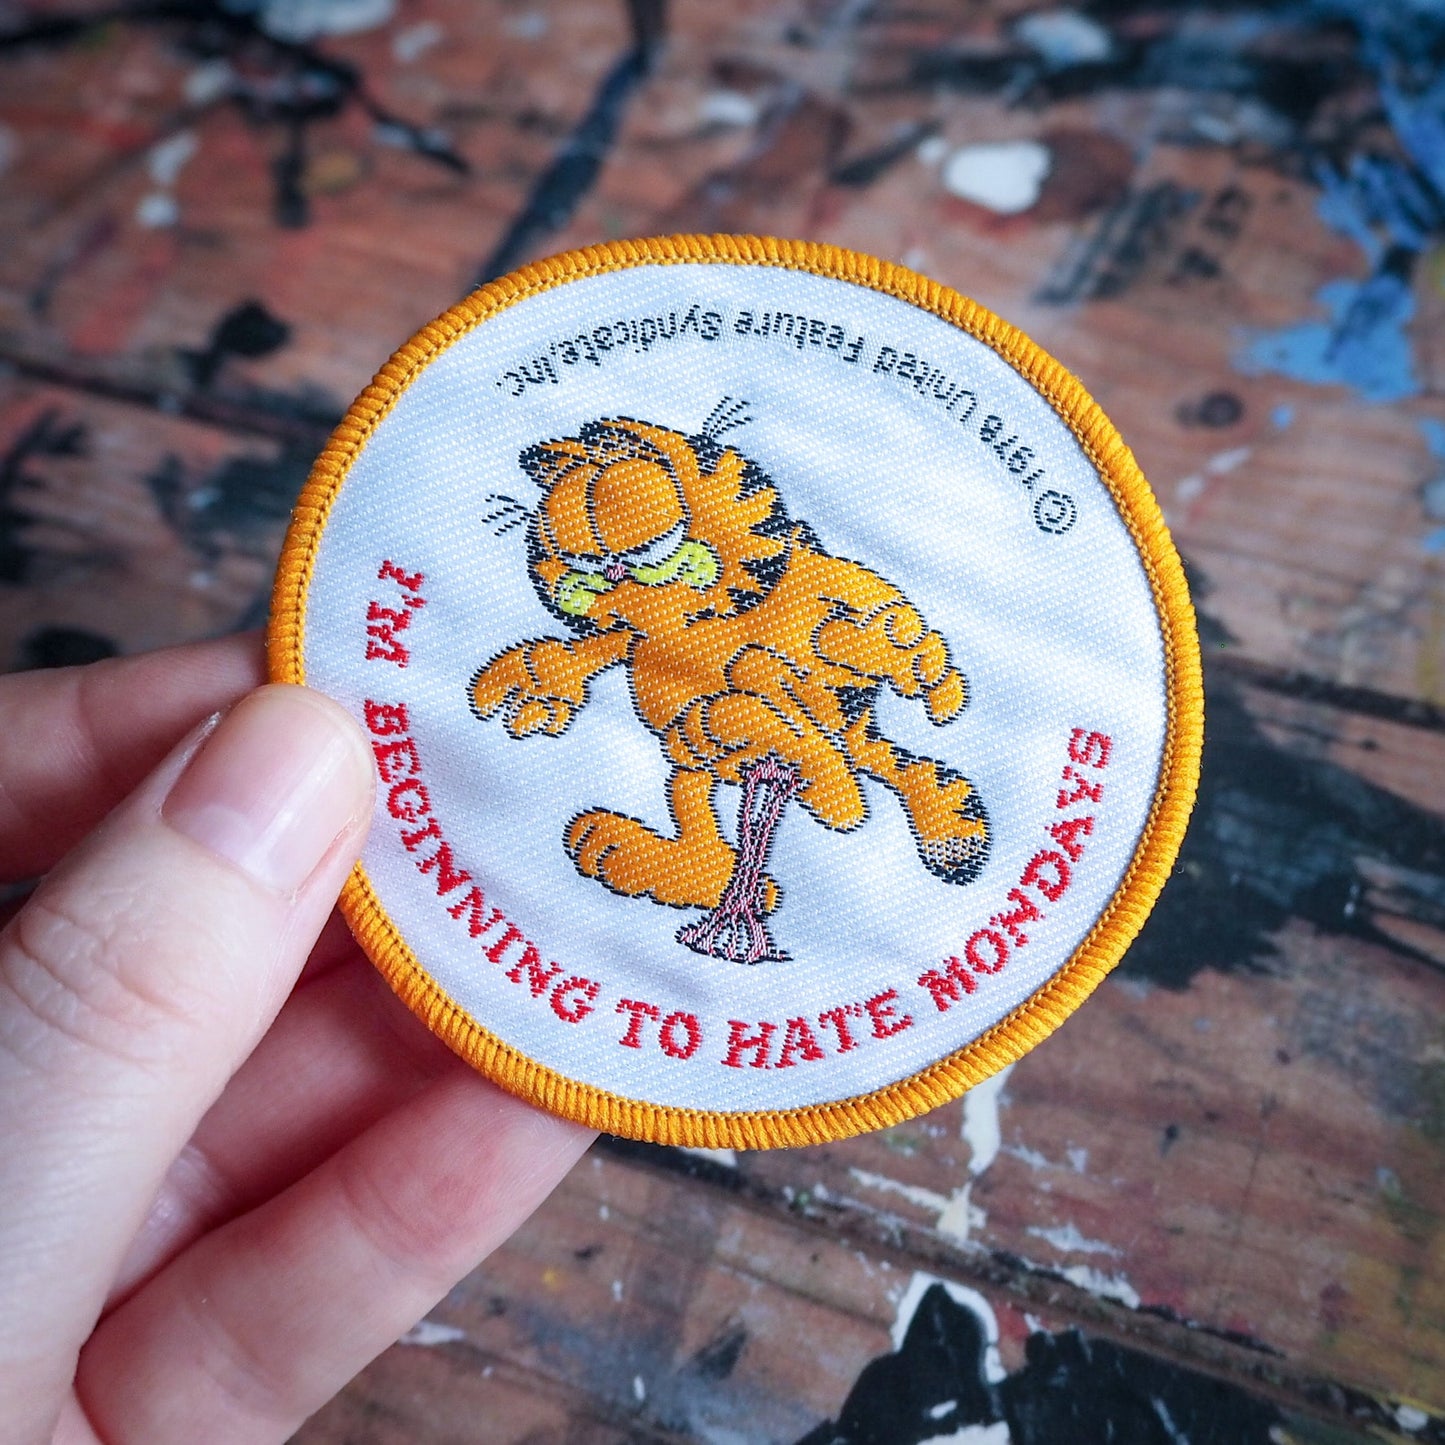 Vintage 1978 Garfield ‘I’m Beginning to Hate Mondays’ Patch